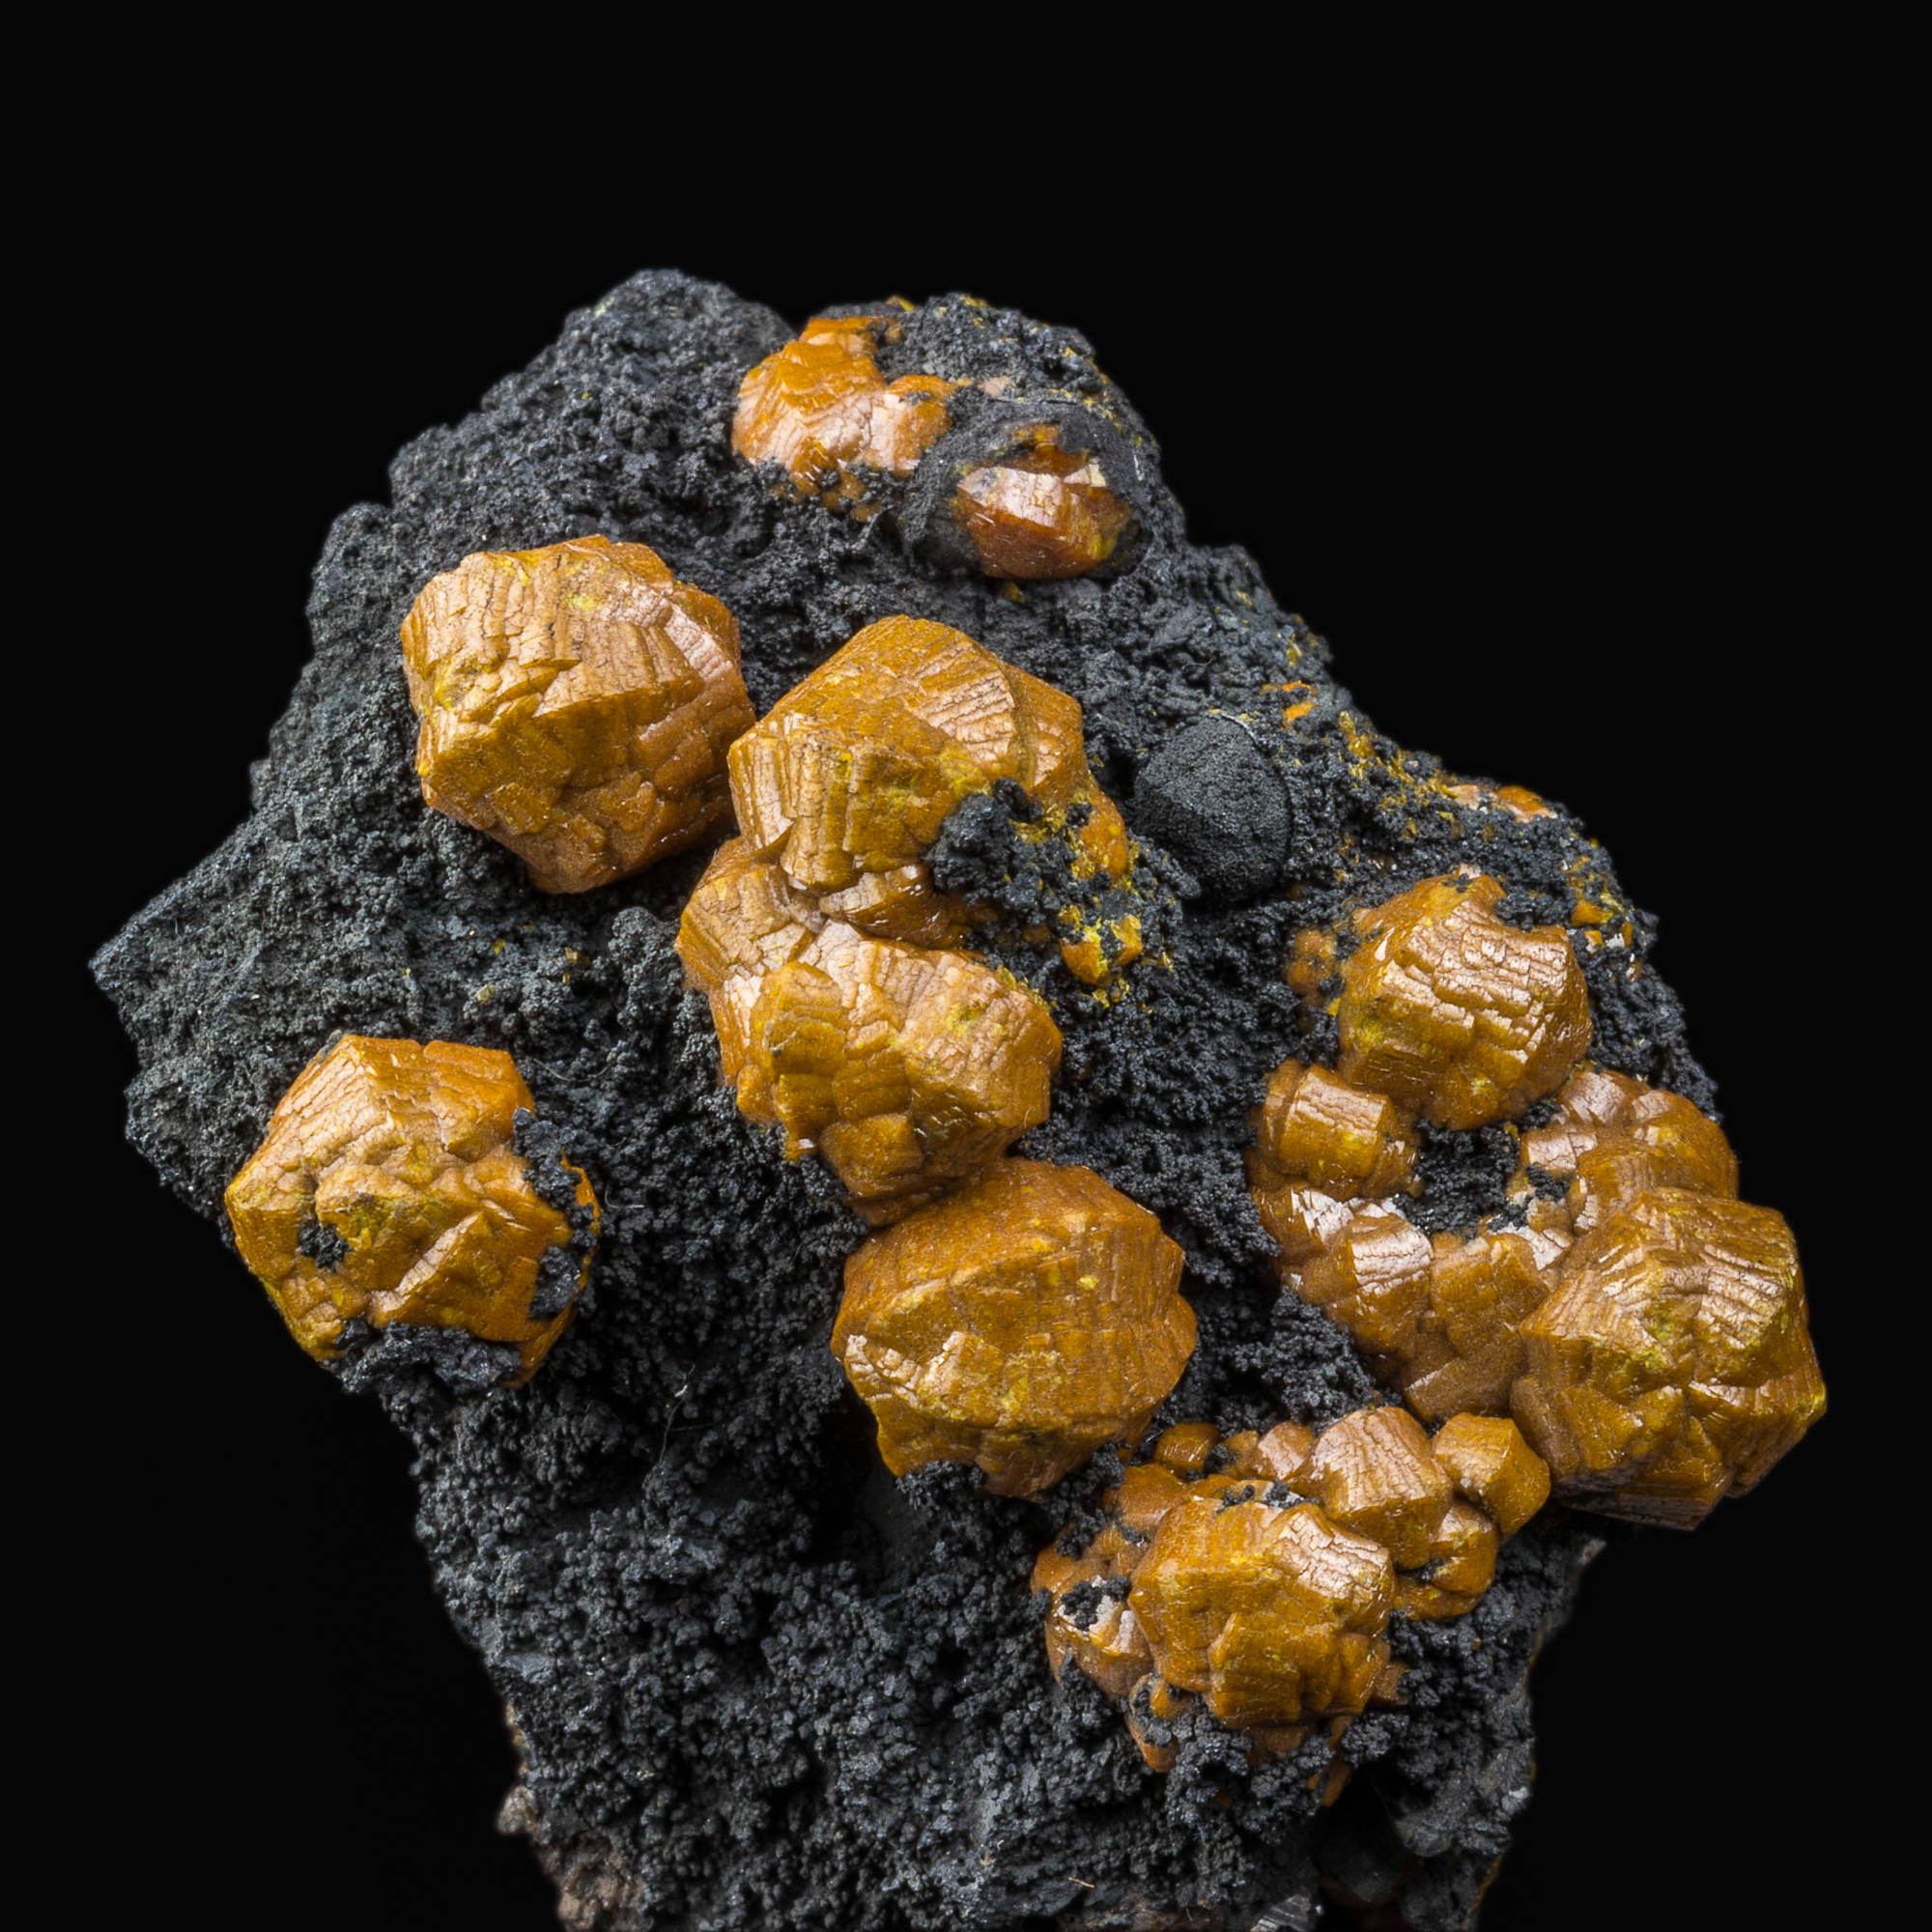 Campylite crystals to 1 cm on manganese oxide matrix. Drygill Mine, Caldbeck Fells.